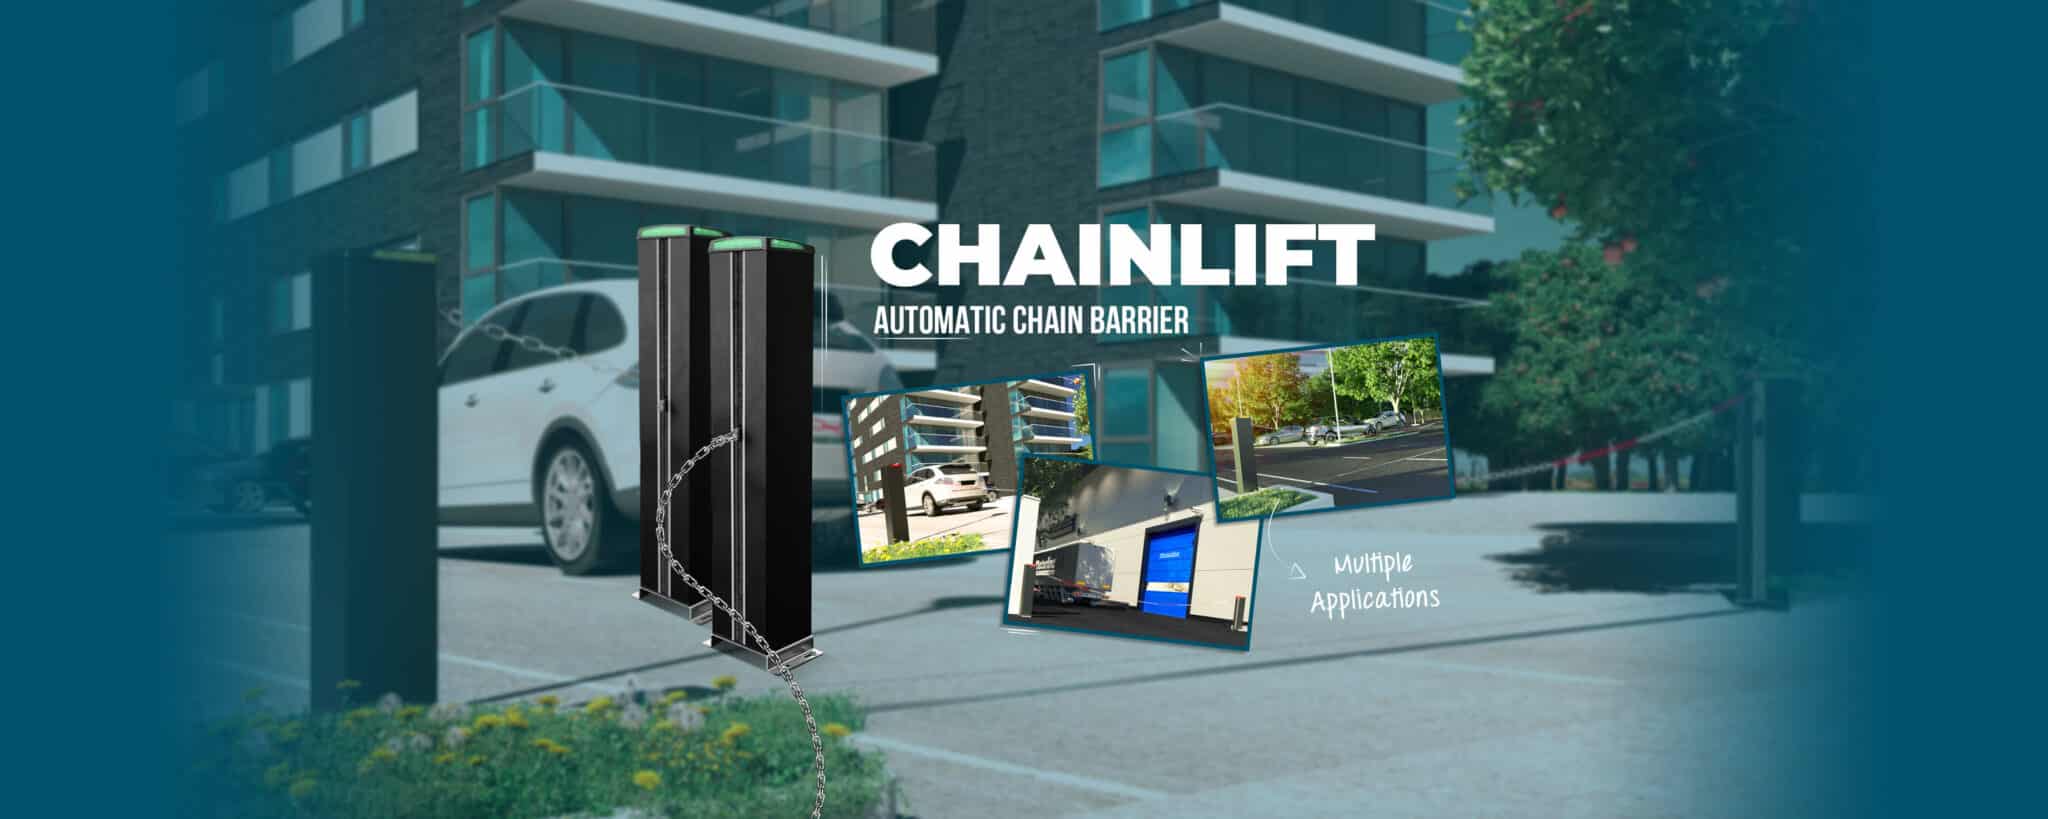 chainlift_en